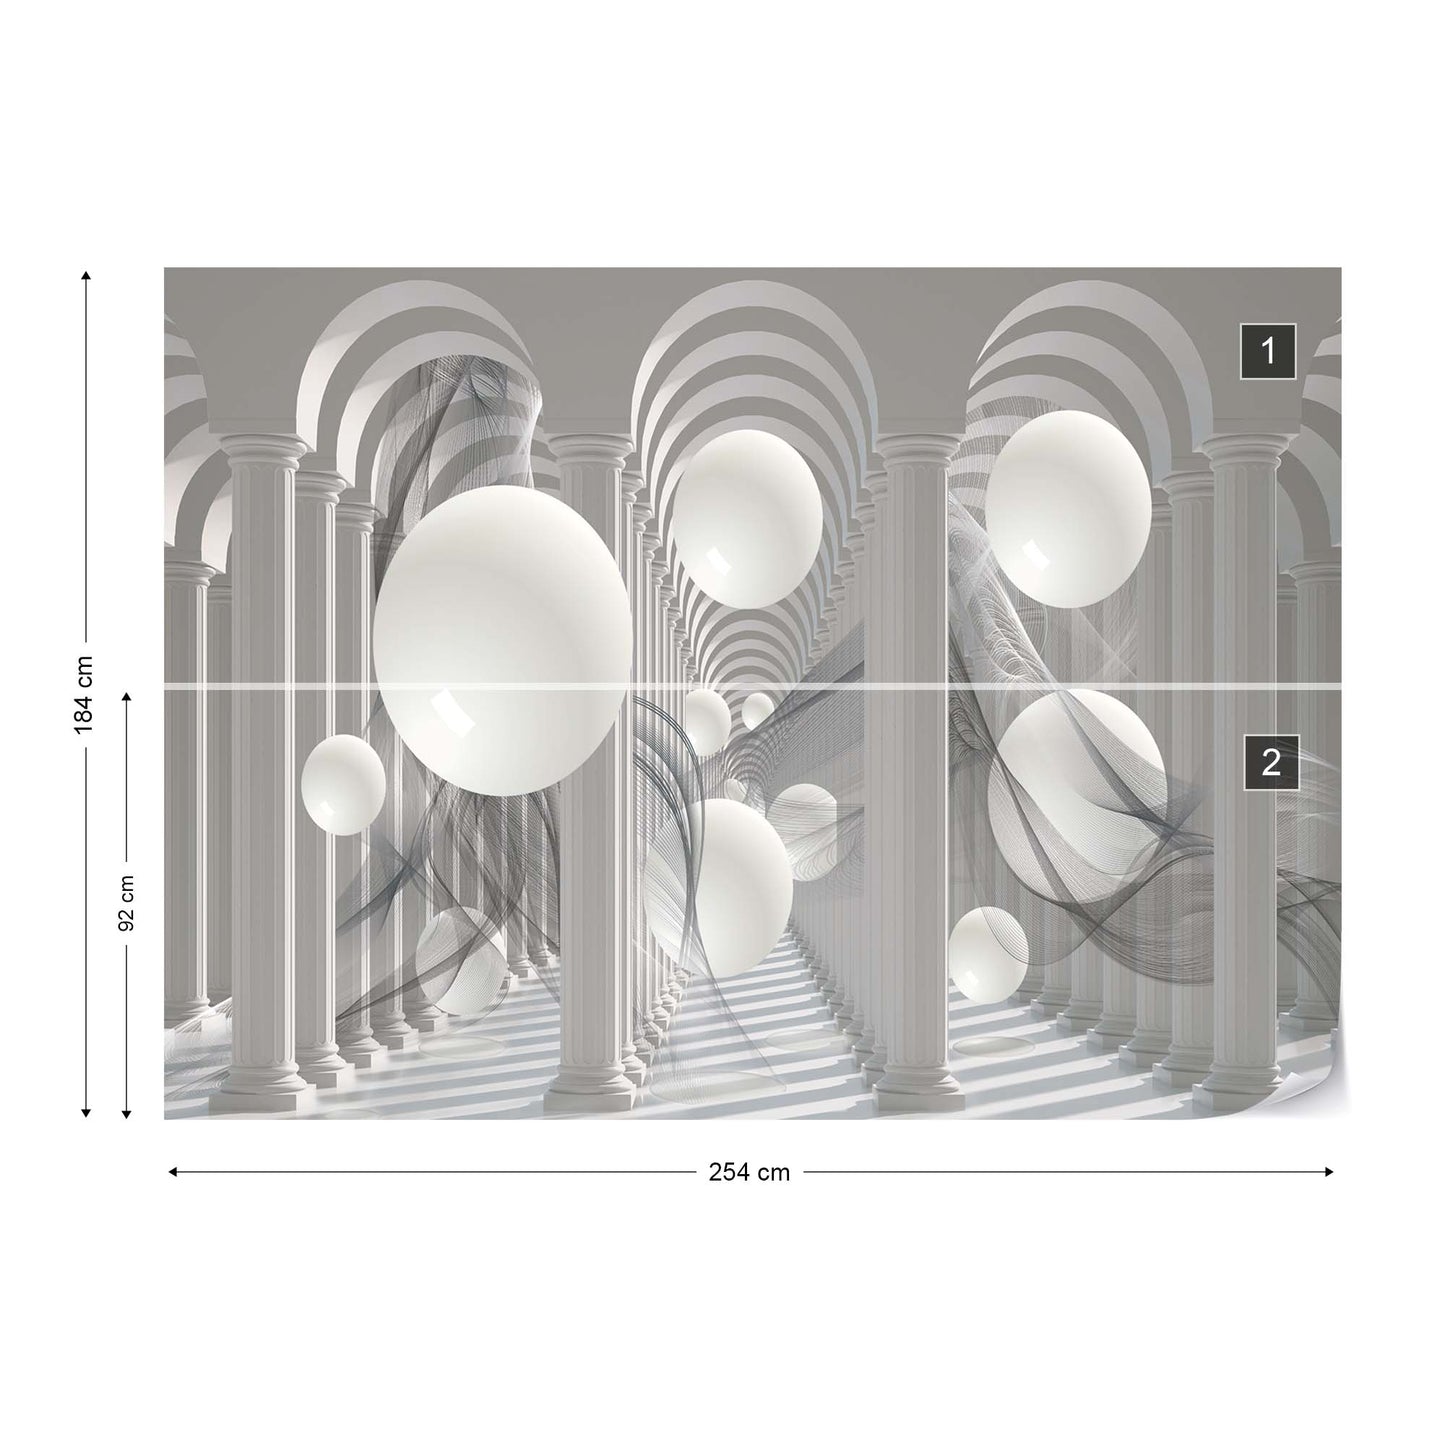 3D Columns Optical Illusion Photo Wallpaper Wall Mural - USTAD HOME